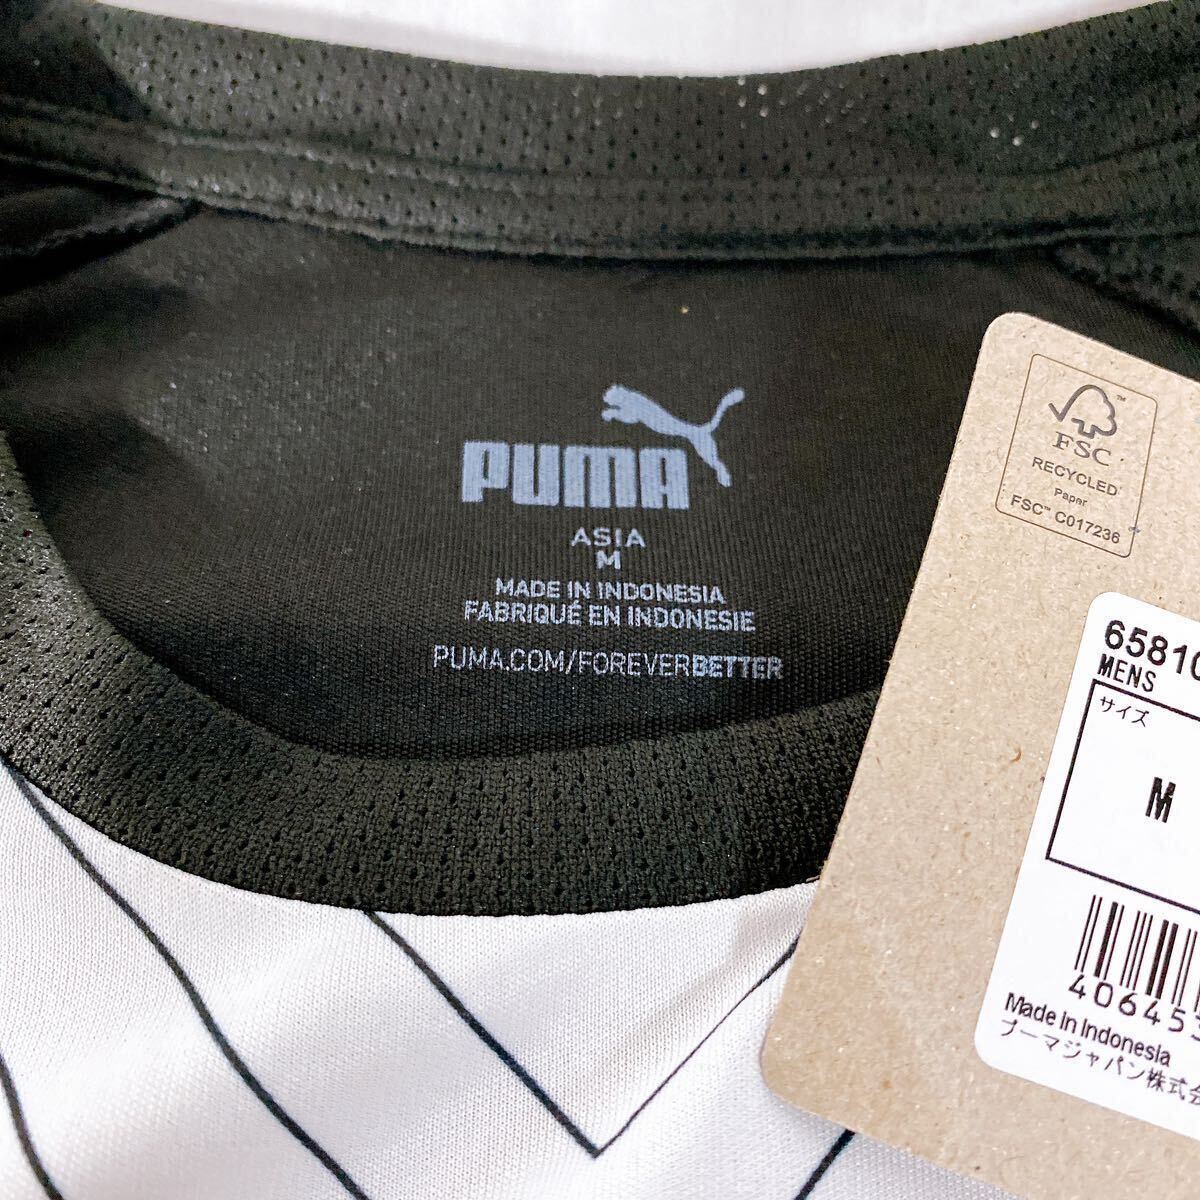  unused with translation Puma Puma short sleeves shirt TEAMLIGA graphic SS shirt M size R-1228